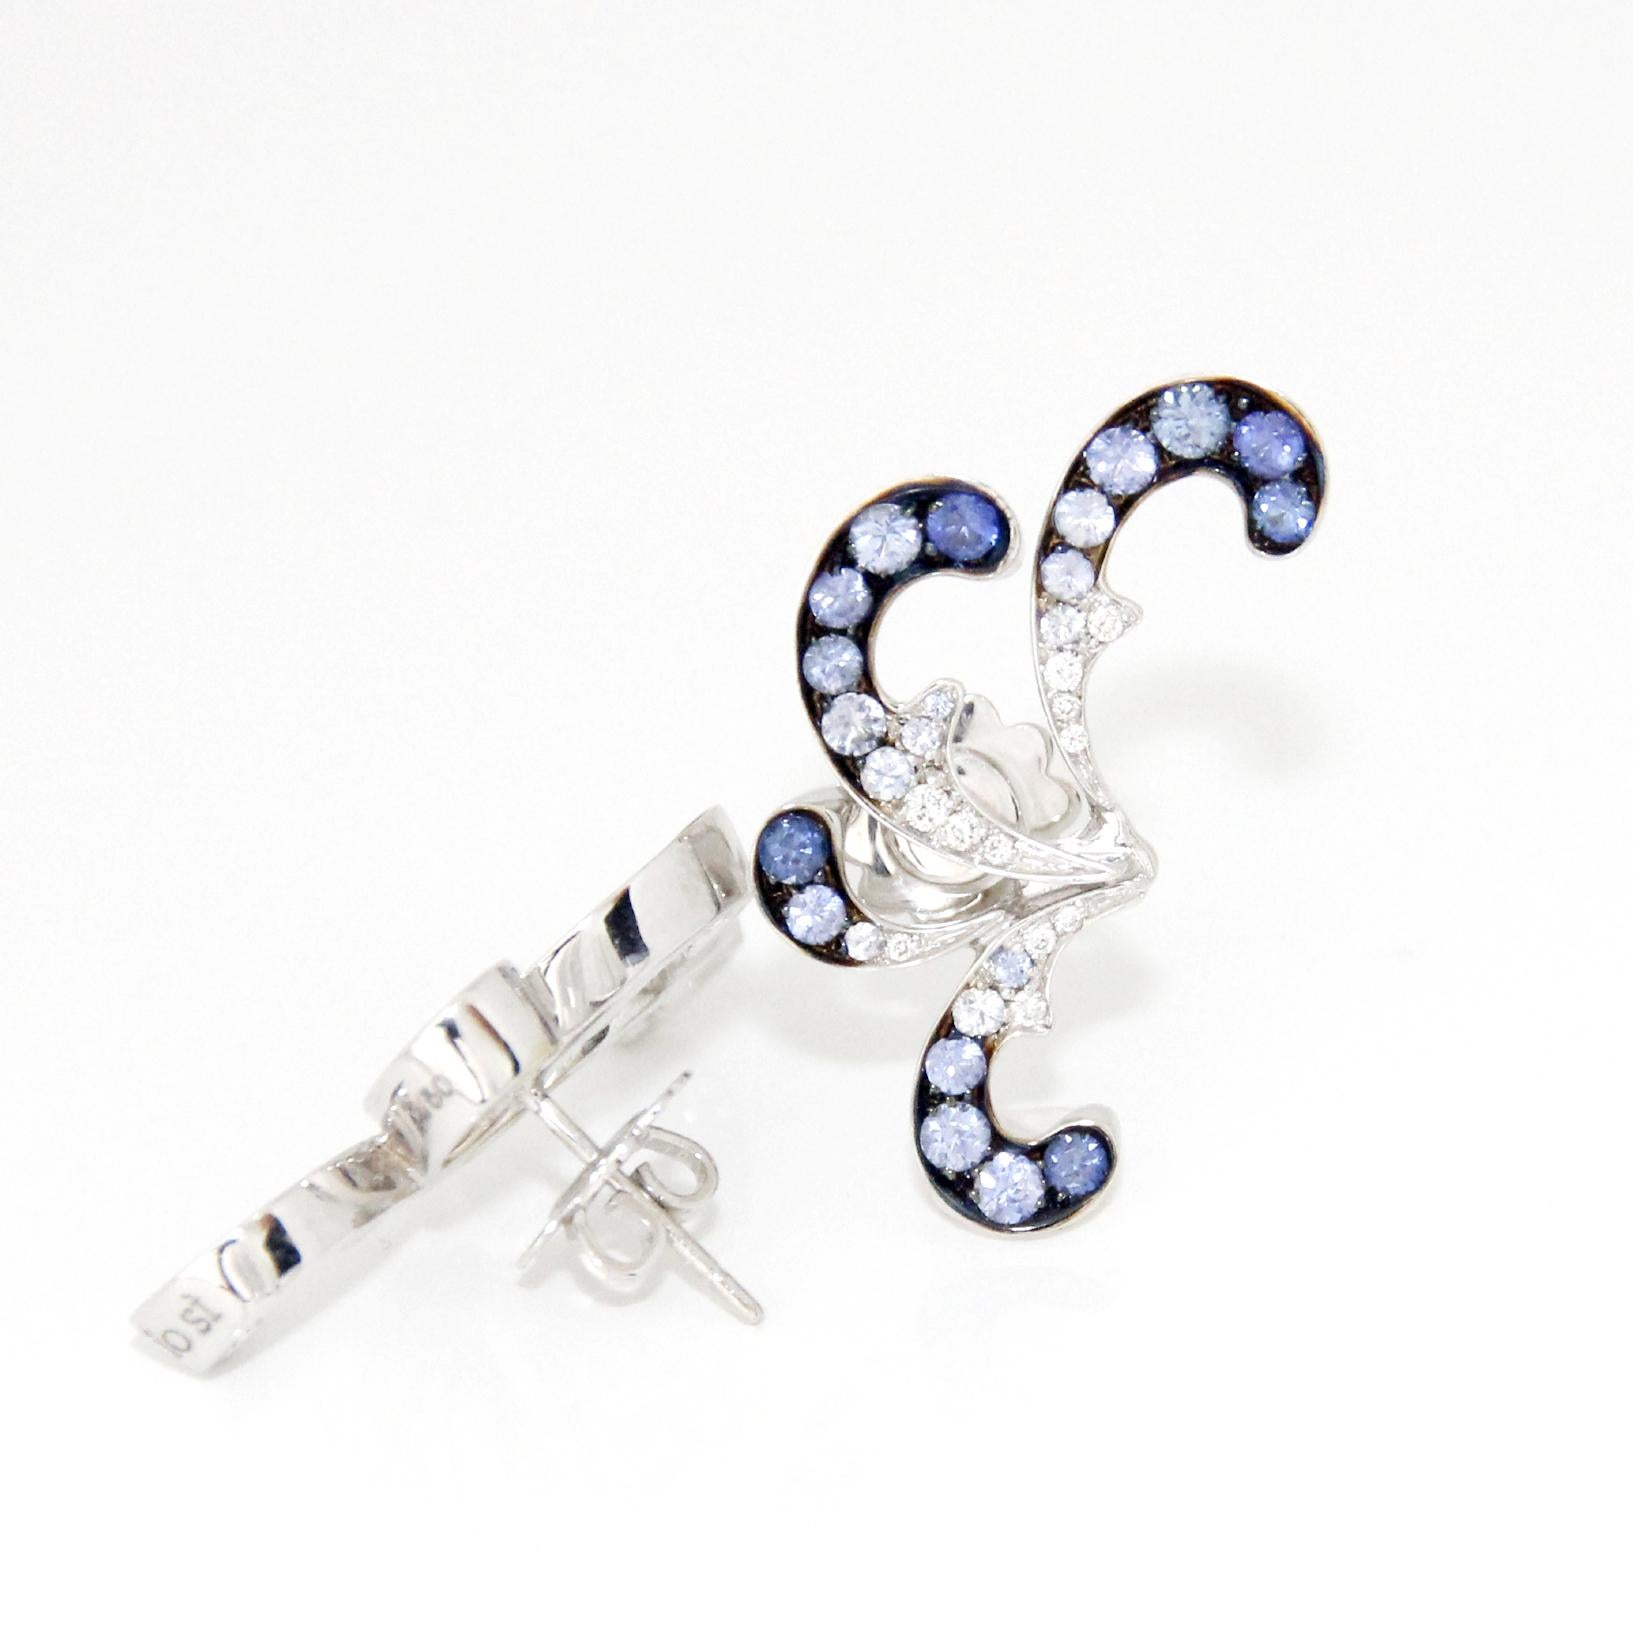  Stefan Hafner 18K White Gold, Diamonds and Blue Sapphire  Earrings
Diamonds 0.24ctw
Sapphires 2.79ctw
Retail $9,400.00